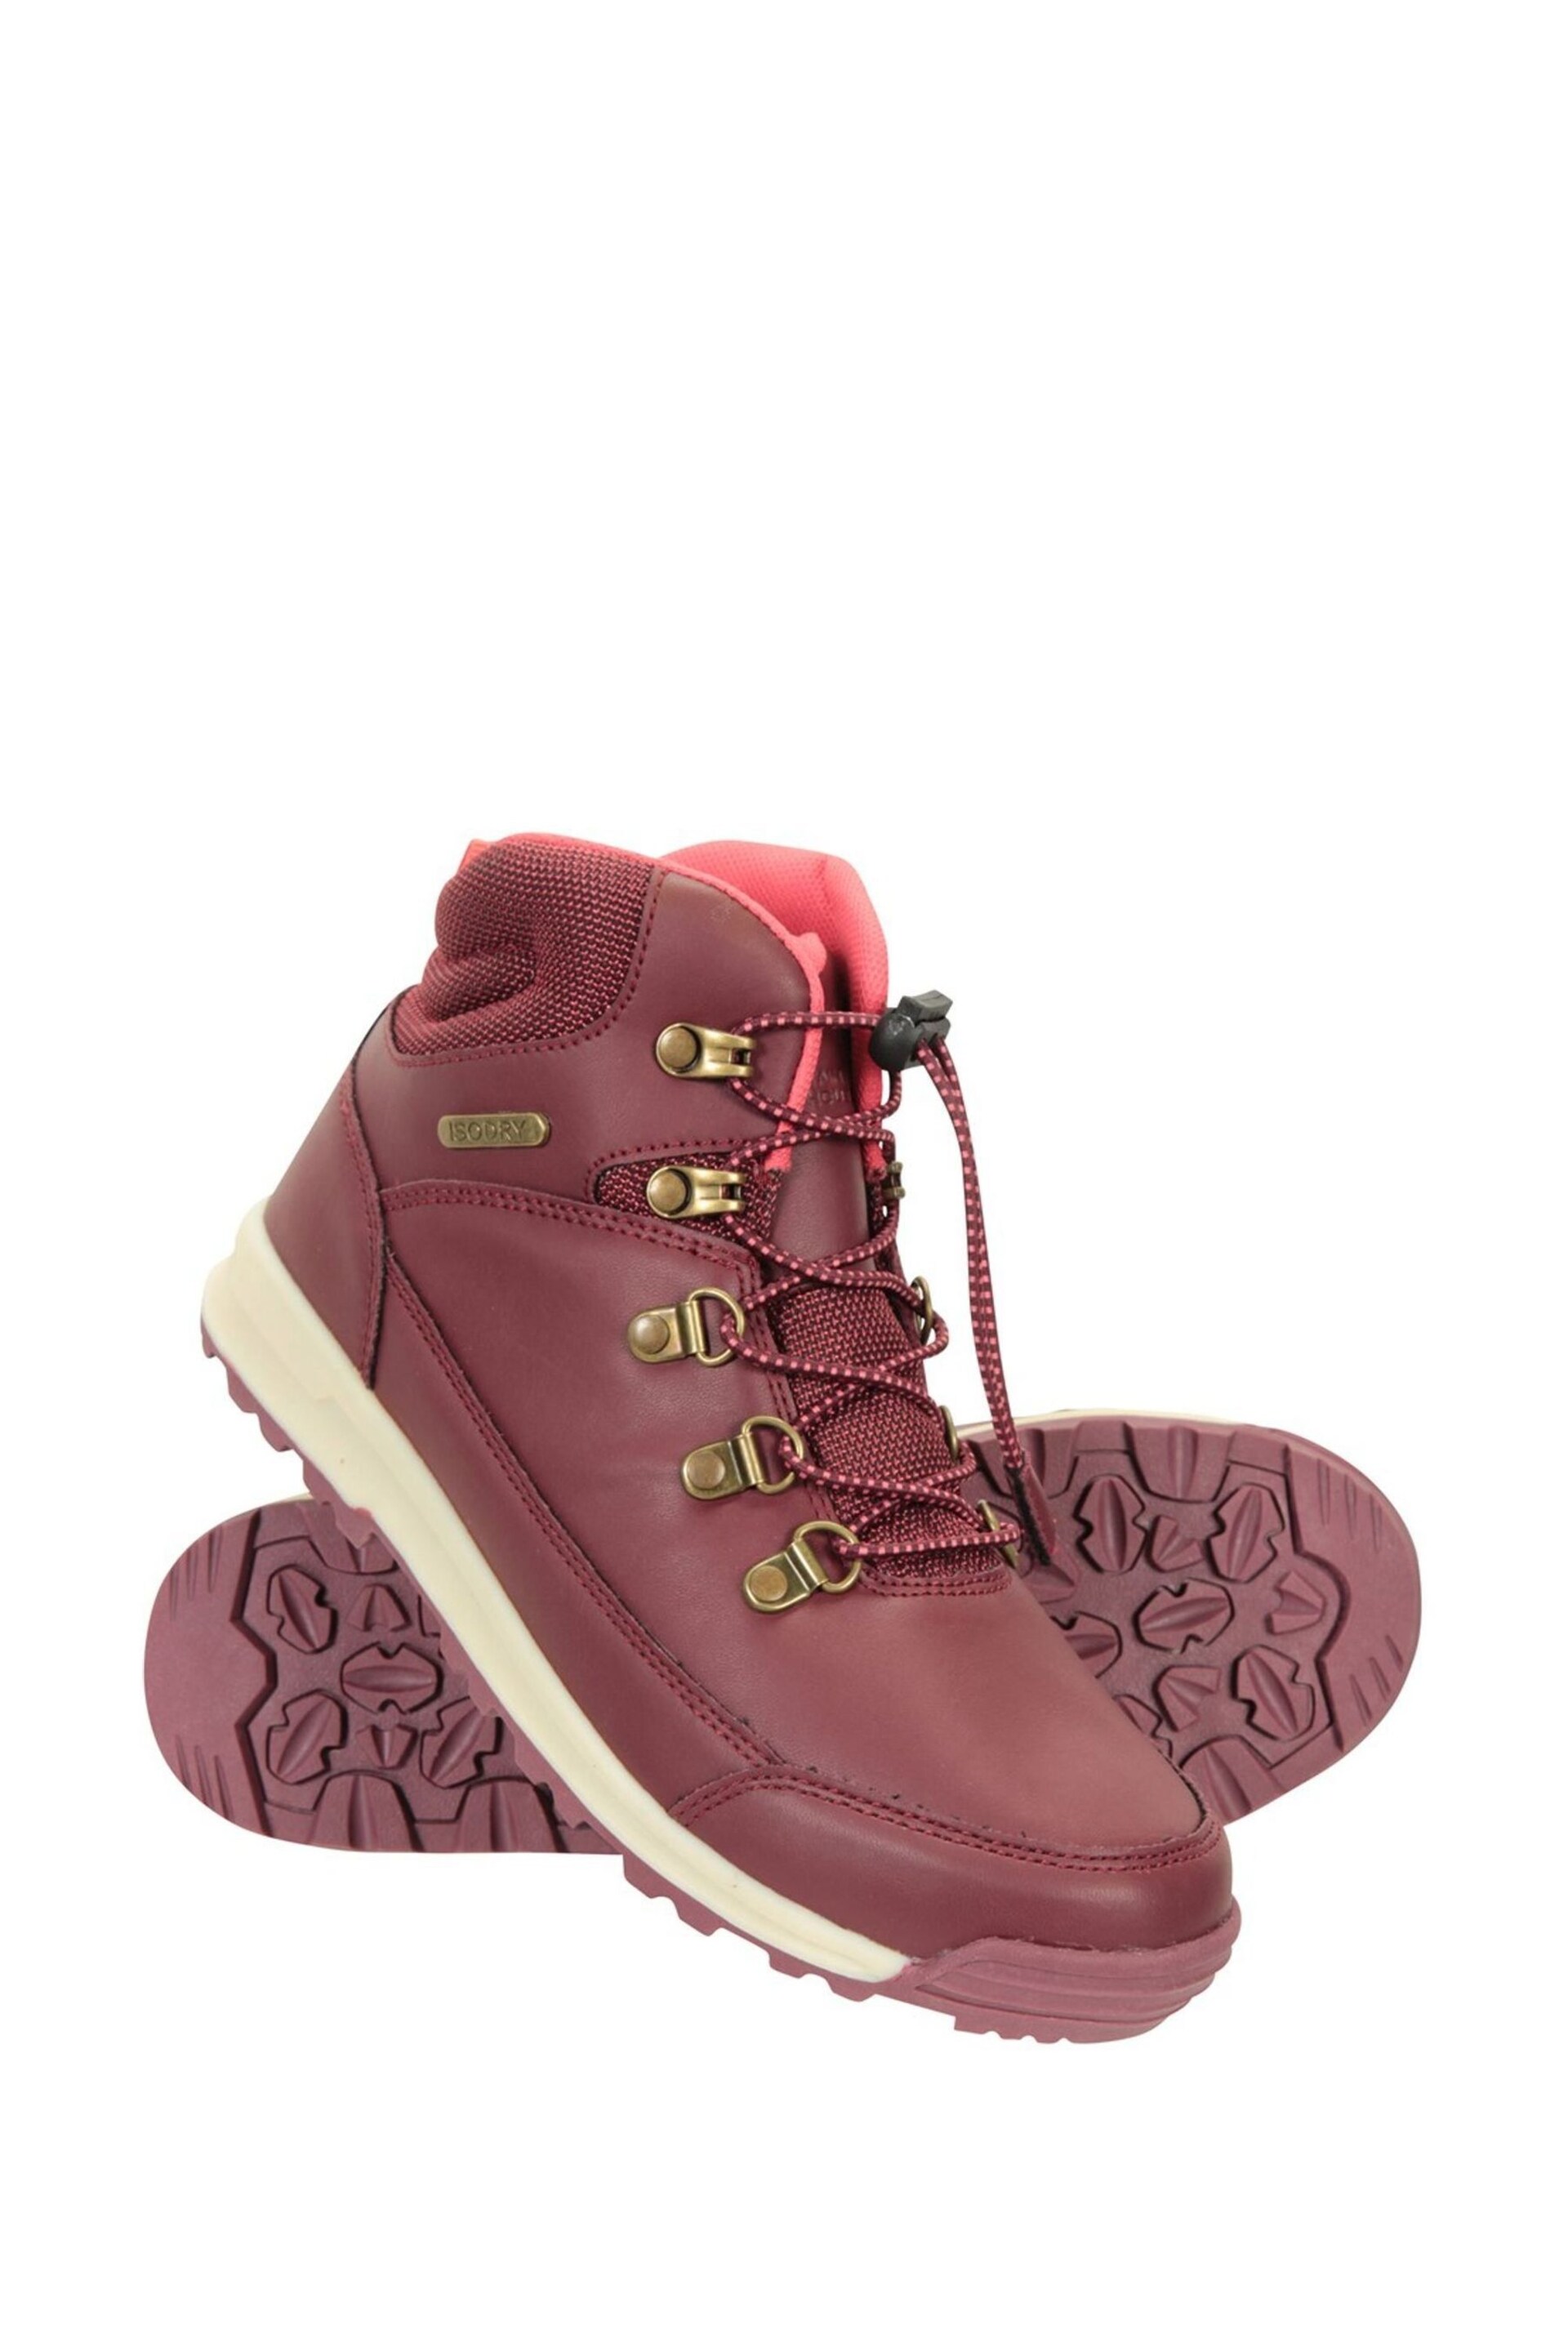 Mountain Warehouse Burgundy Redwood Kids Waterproof Boots - Image 1 of 5